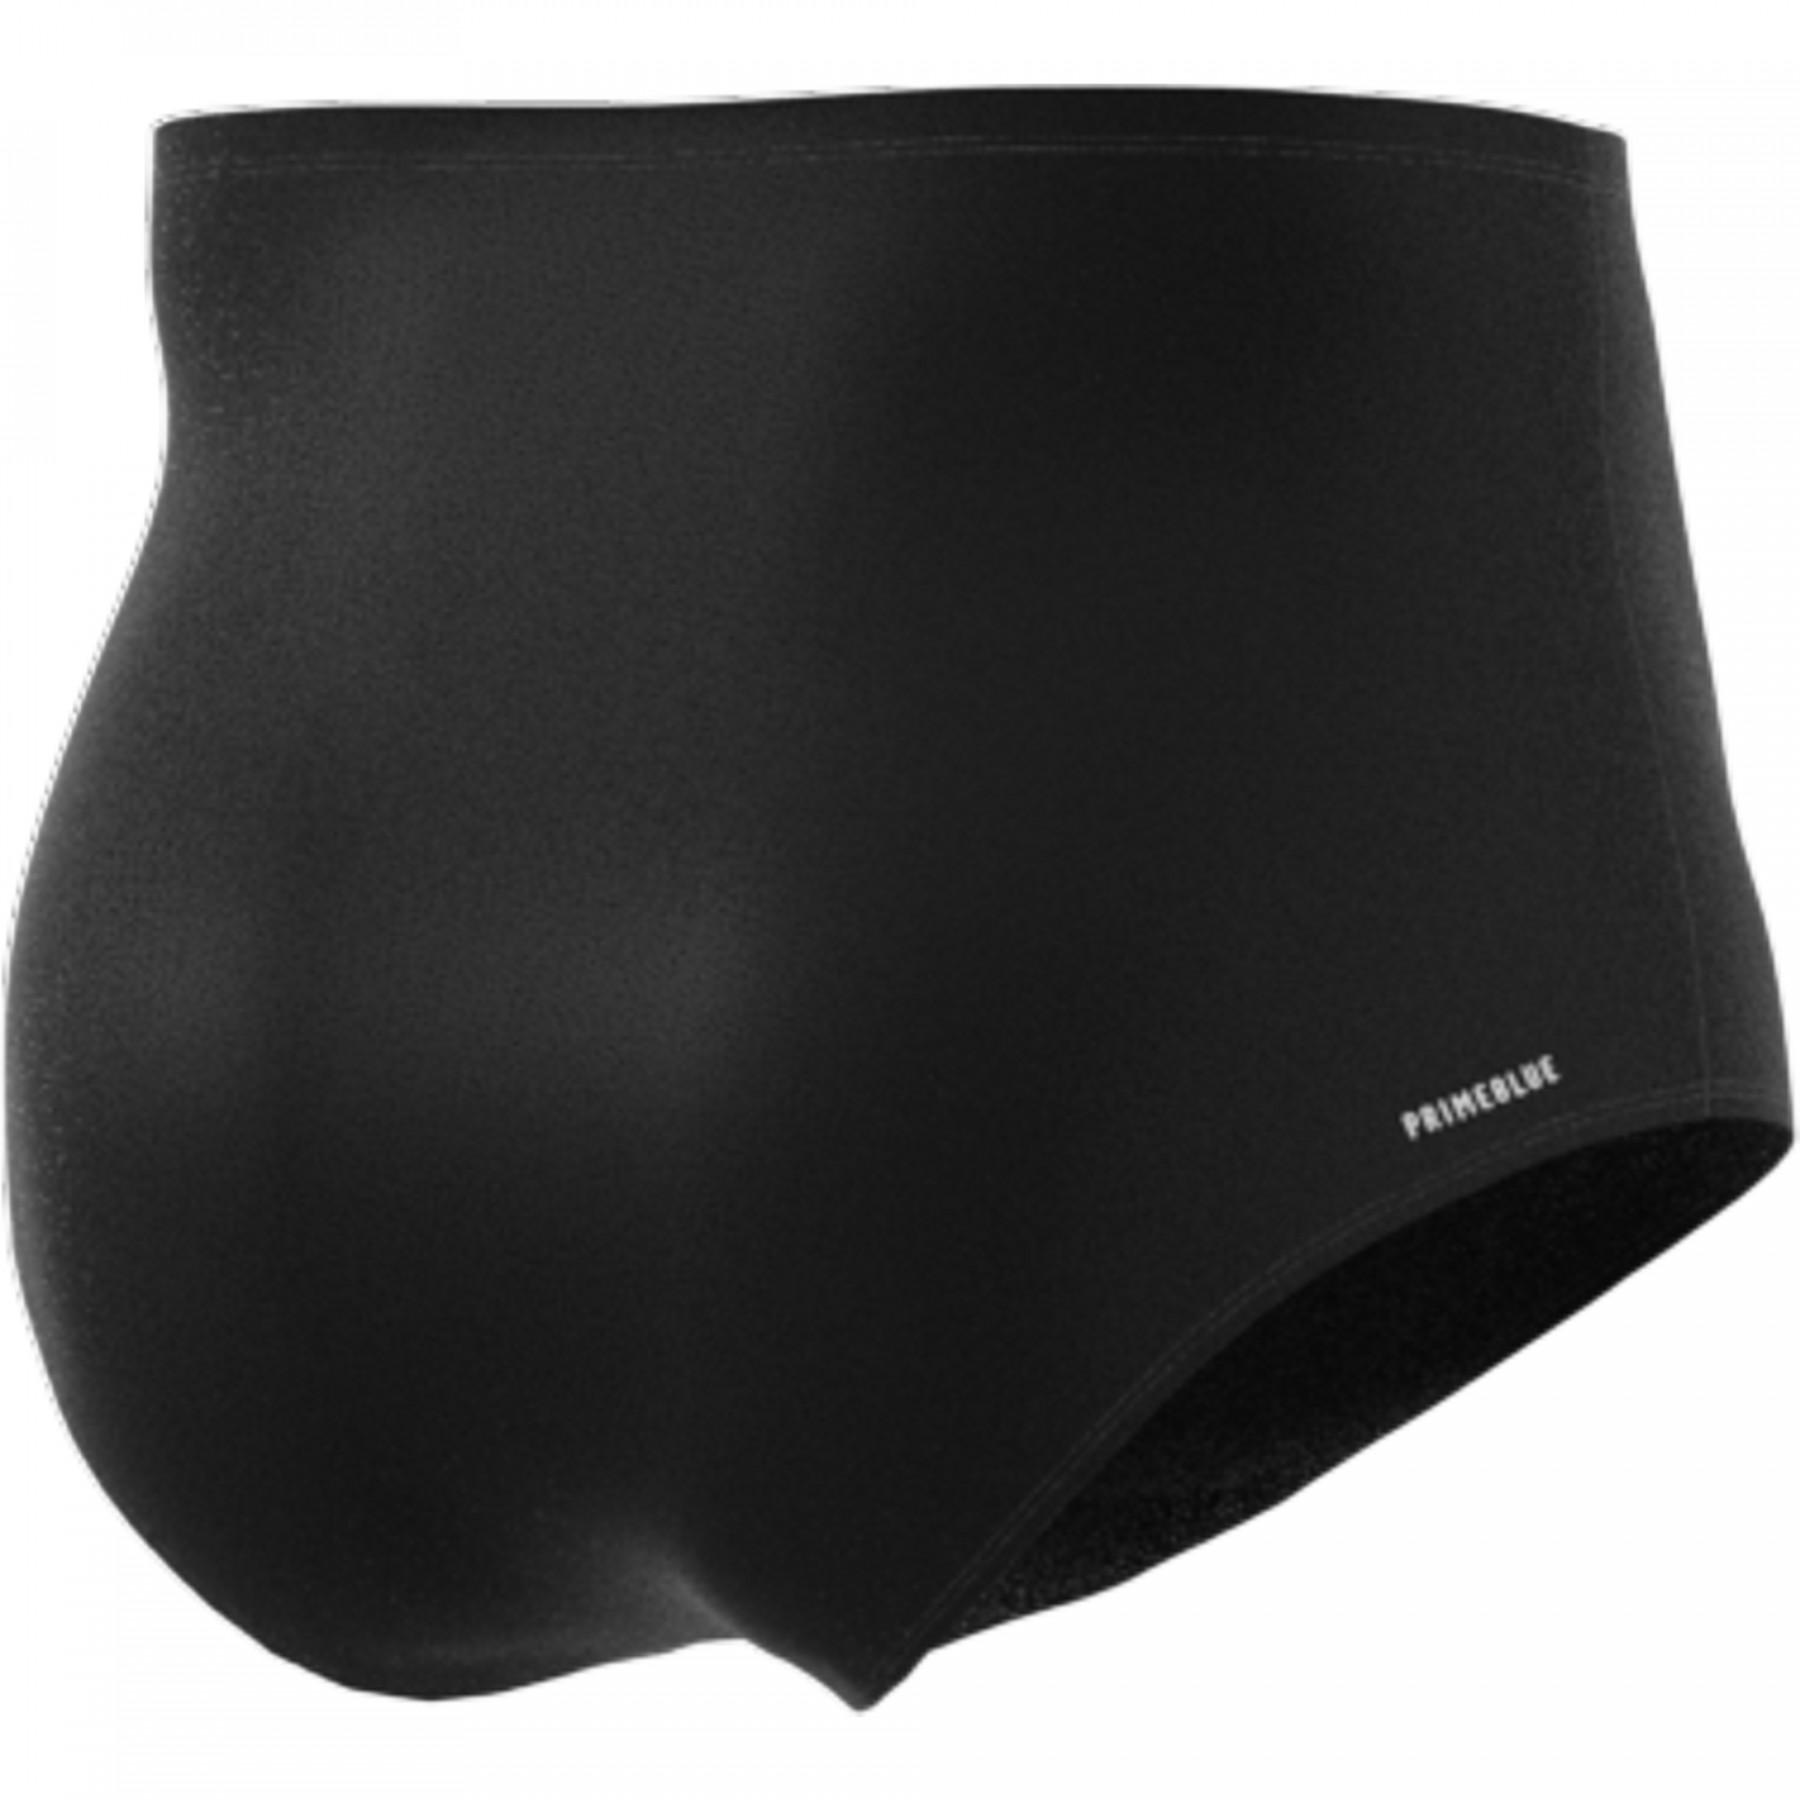 Women's bikini bottoms adidas SH3.RO Grande Taille